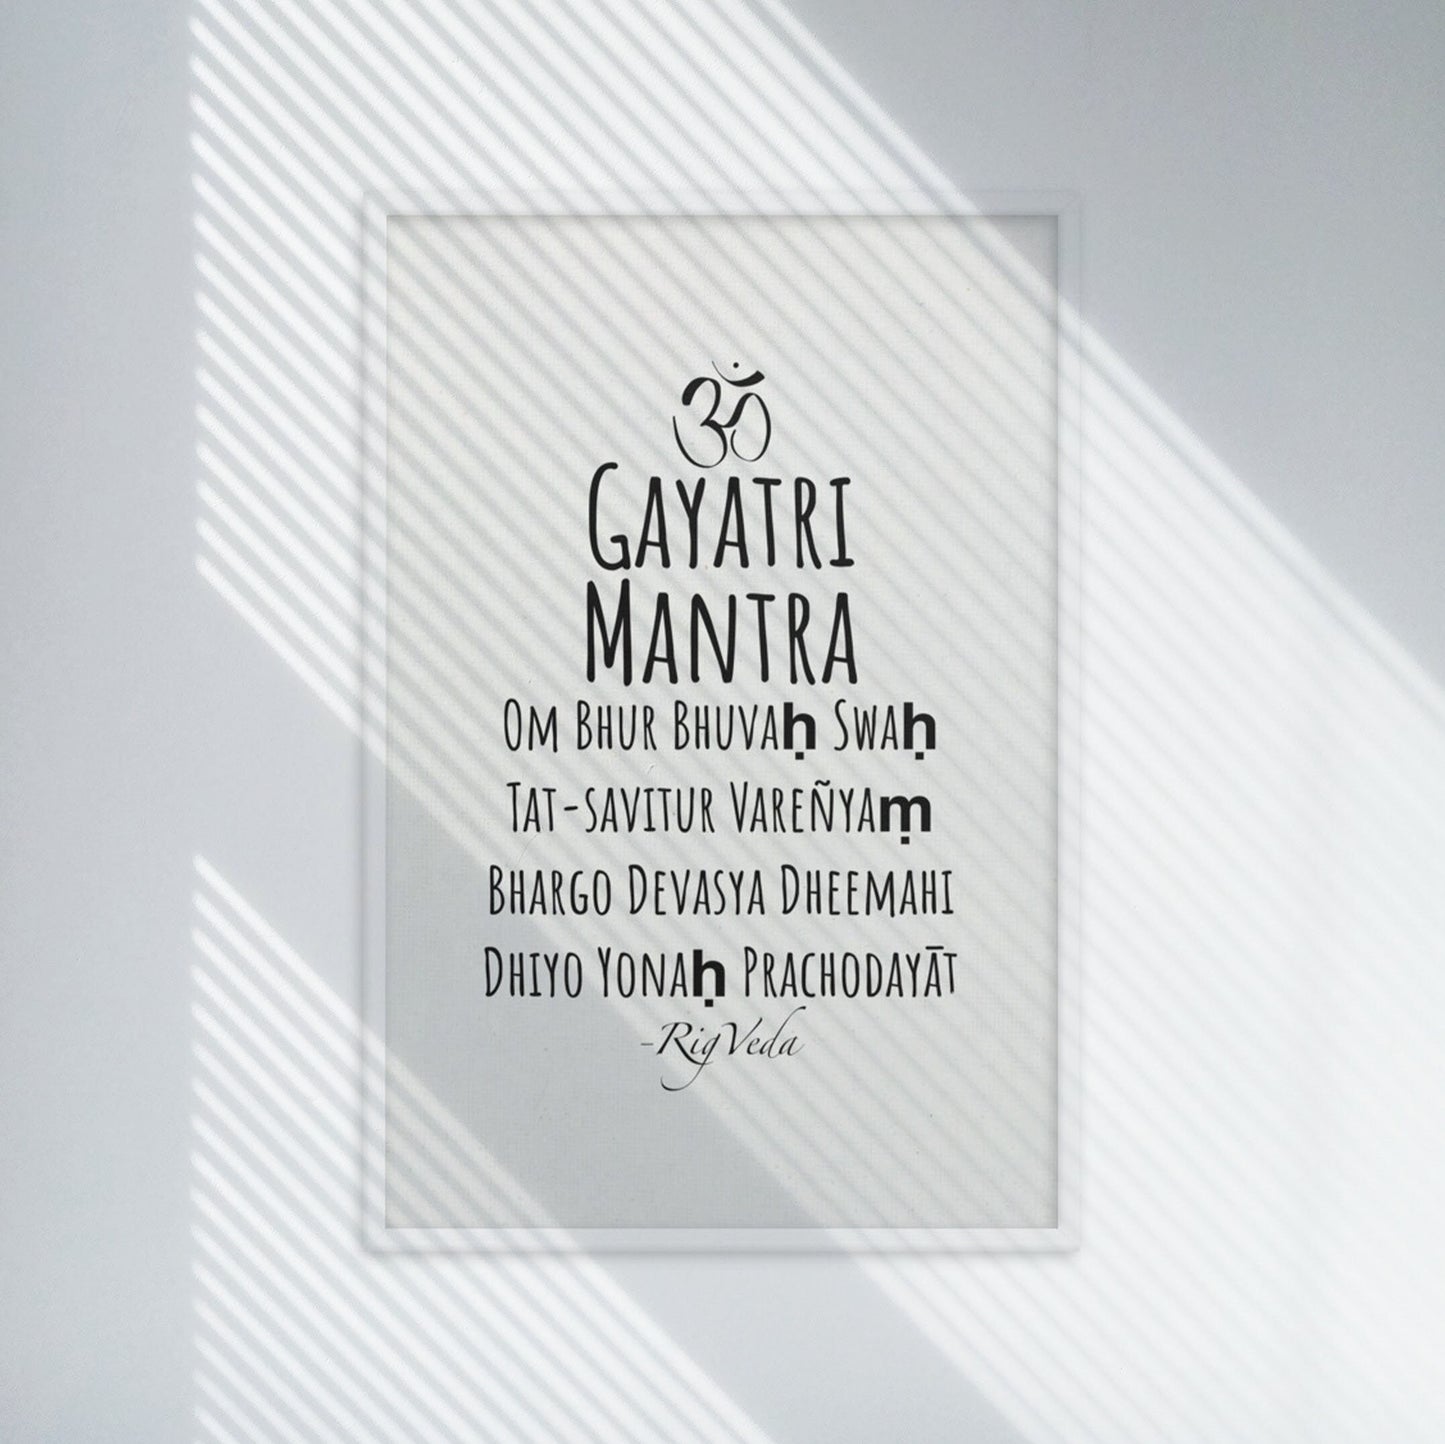 Gayatri mantra in english, black on white minimalist poster in white frame.